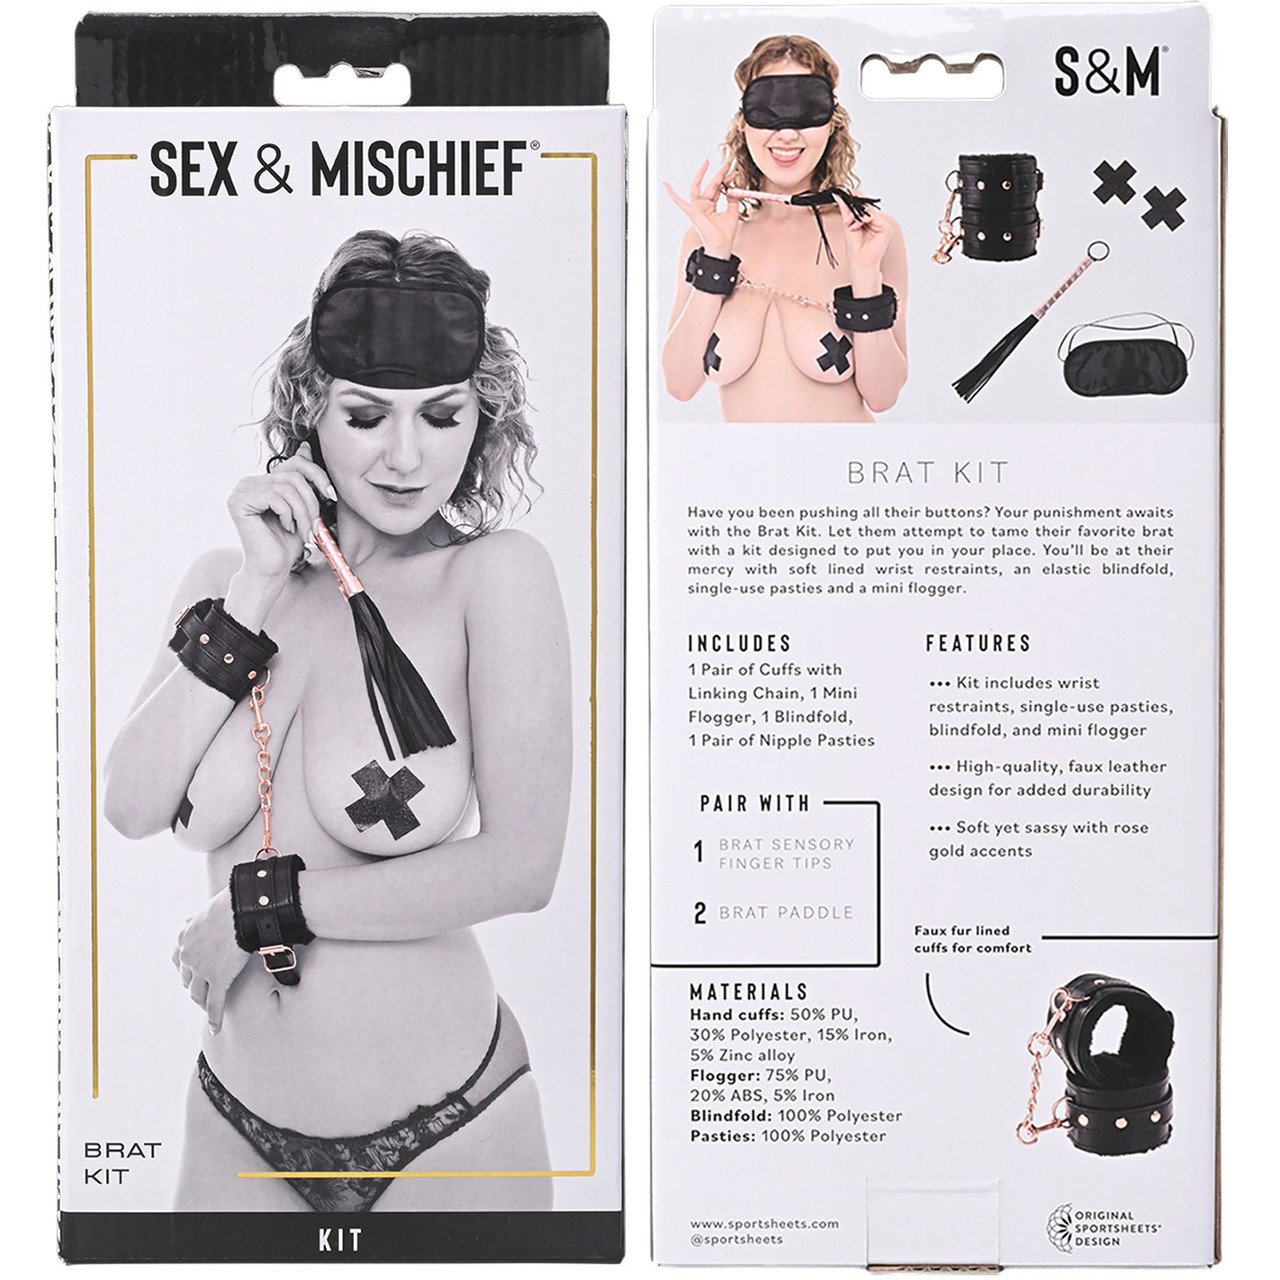 Brat Sensory Fingertips - Accessoire BDSM - Sex & Mischief - Qc